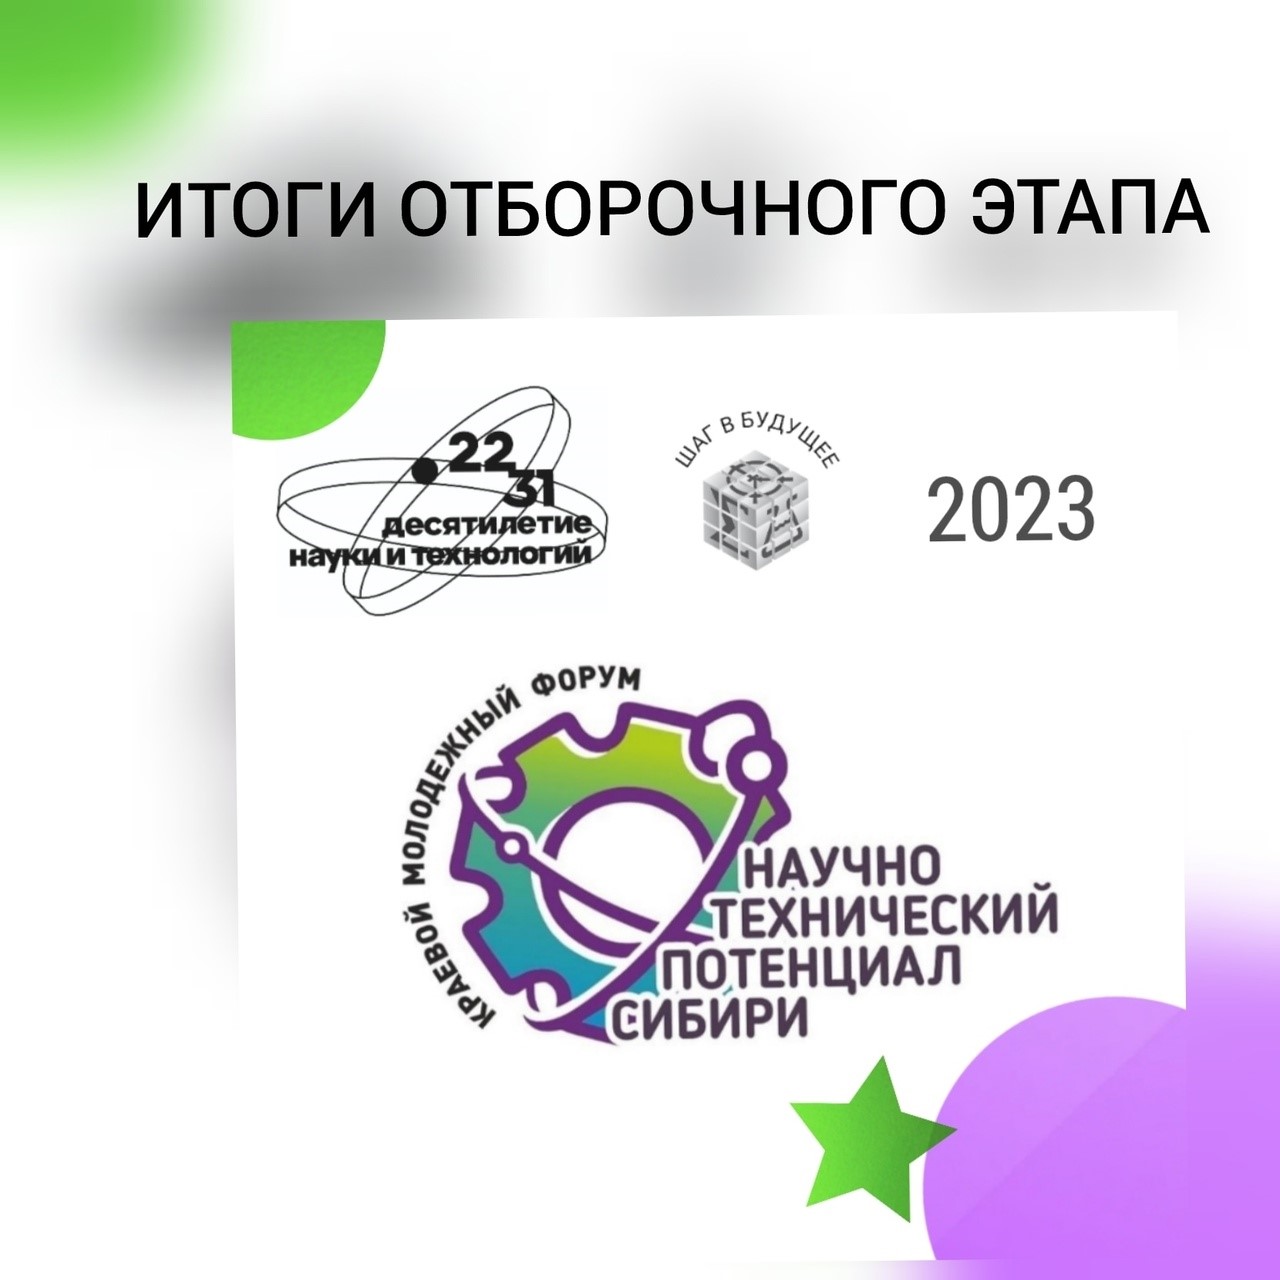 Итоги отборочного этапа краевого молодежного форума &amp;quot;Научно-технический потенциал Сибири&amp;quot; 2023.